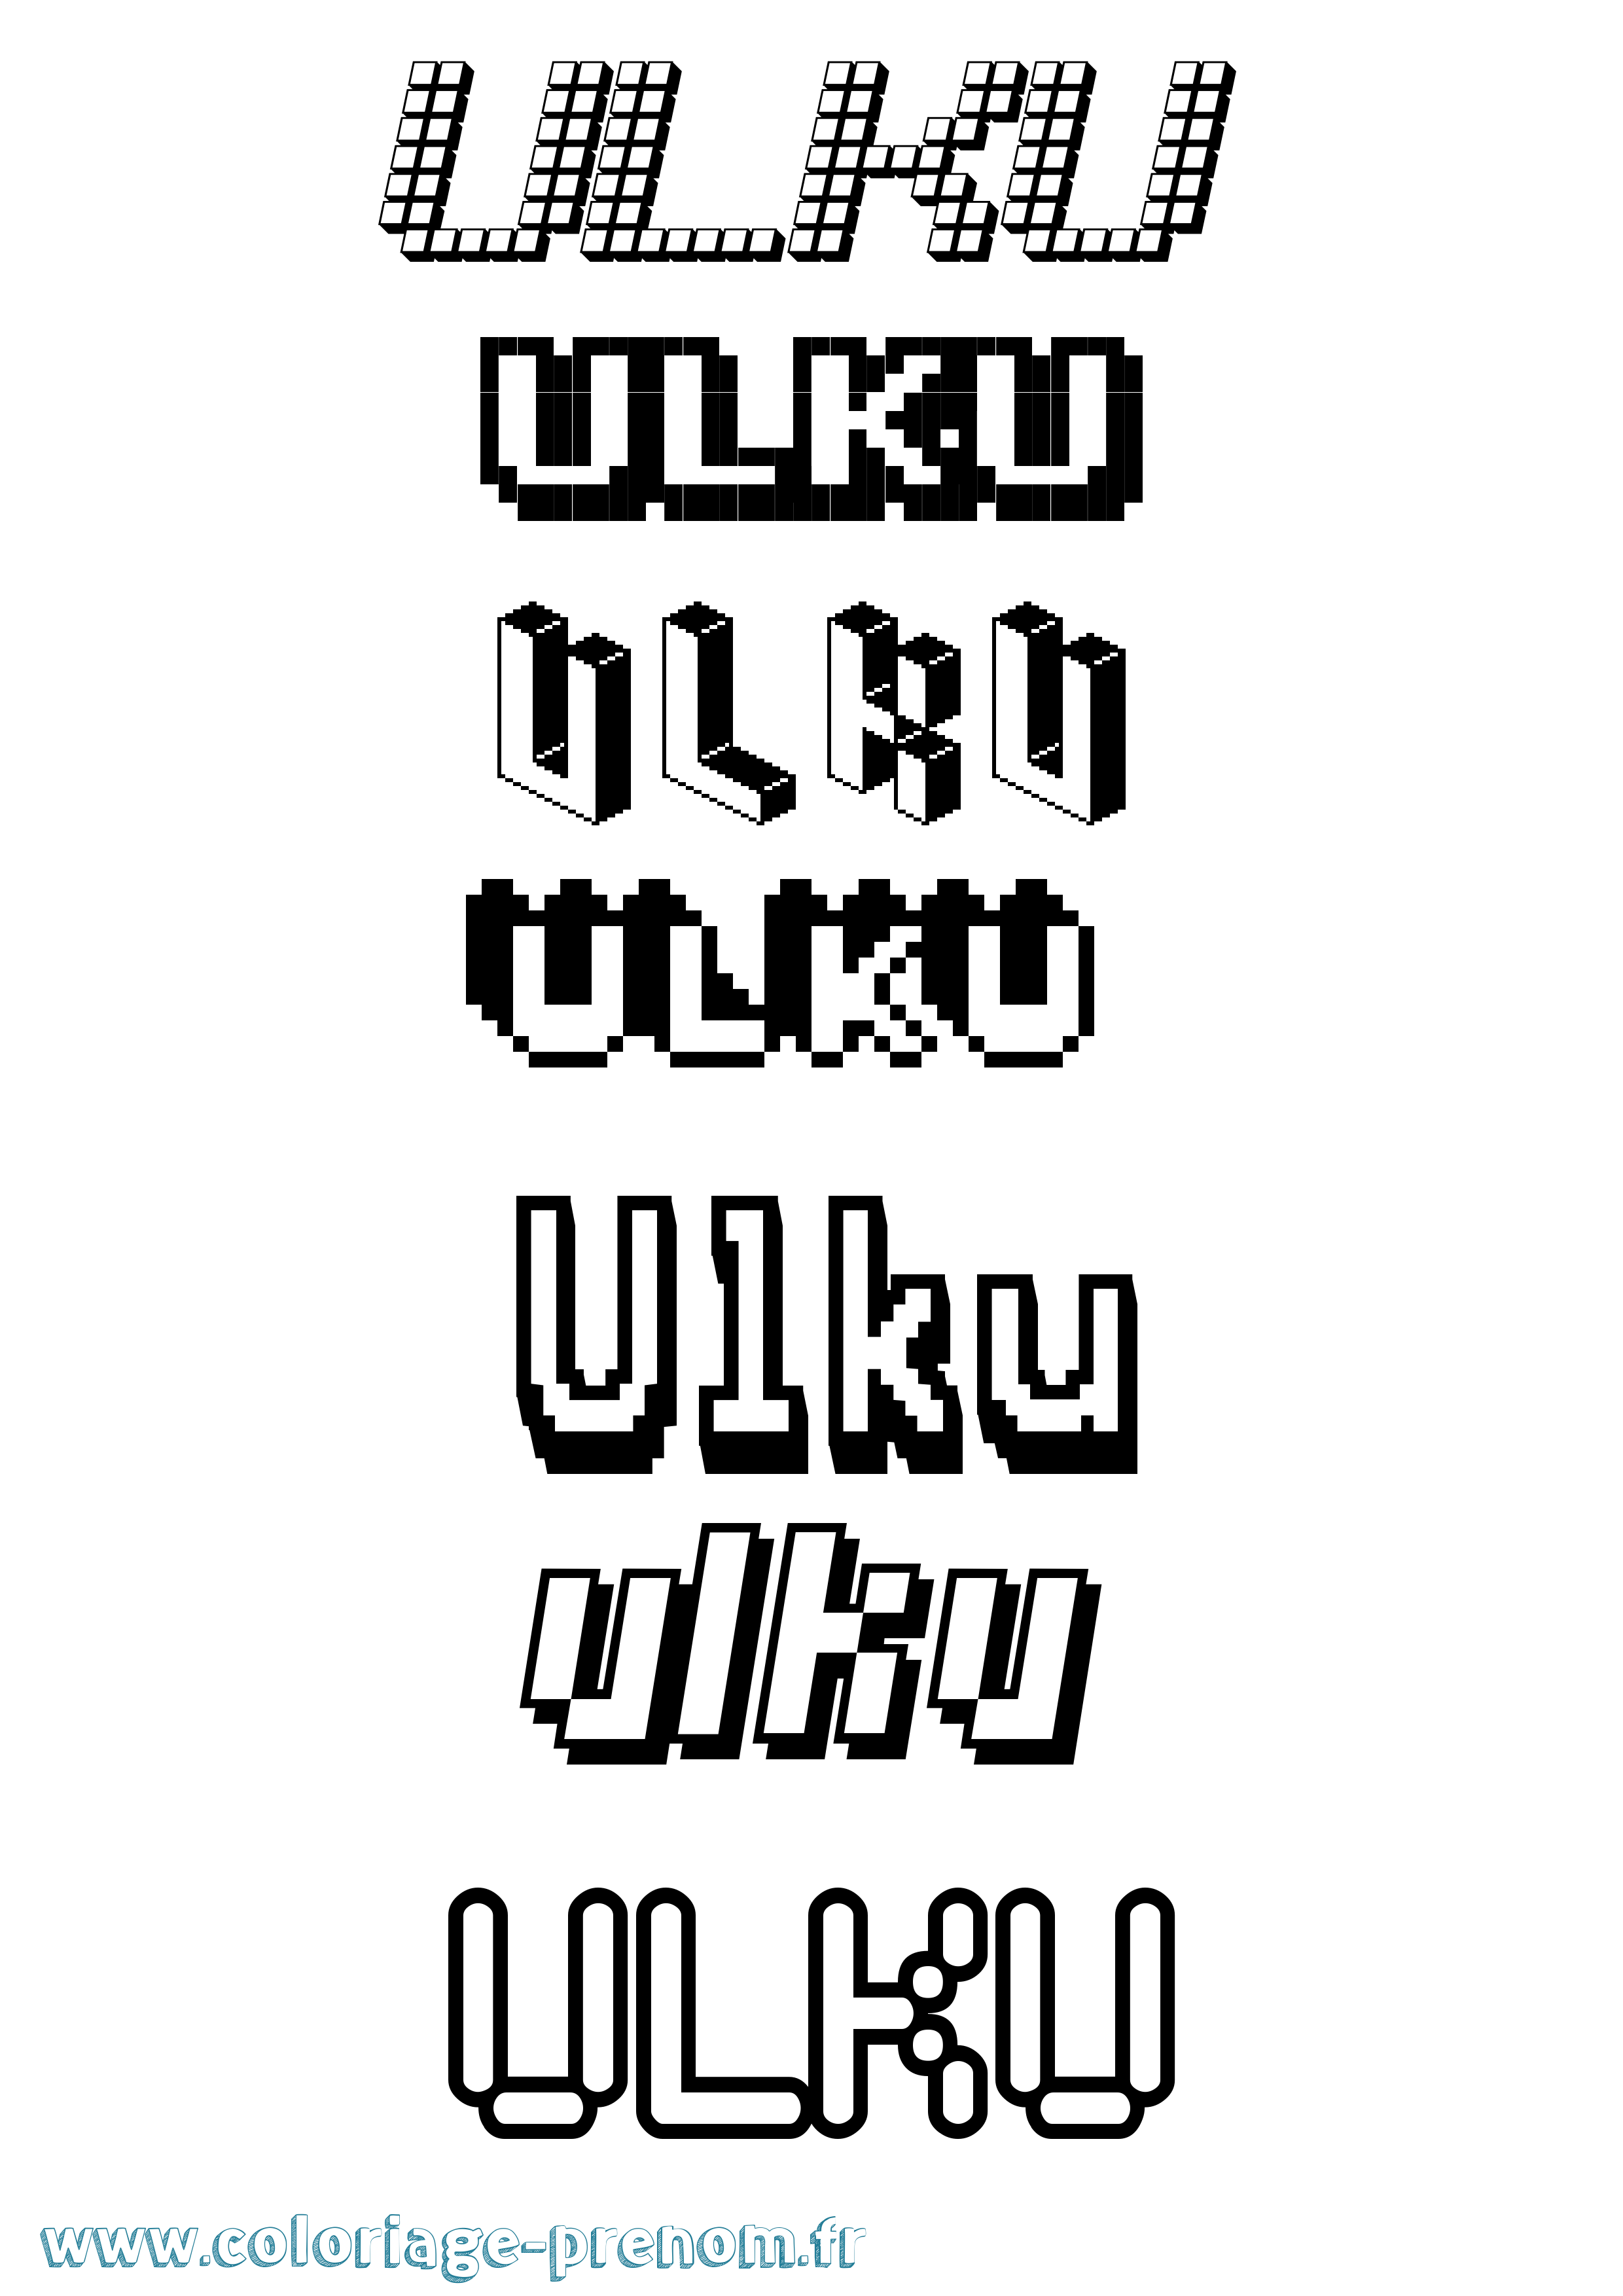 Coloriage prénom Ulku Pixel